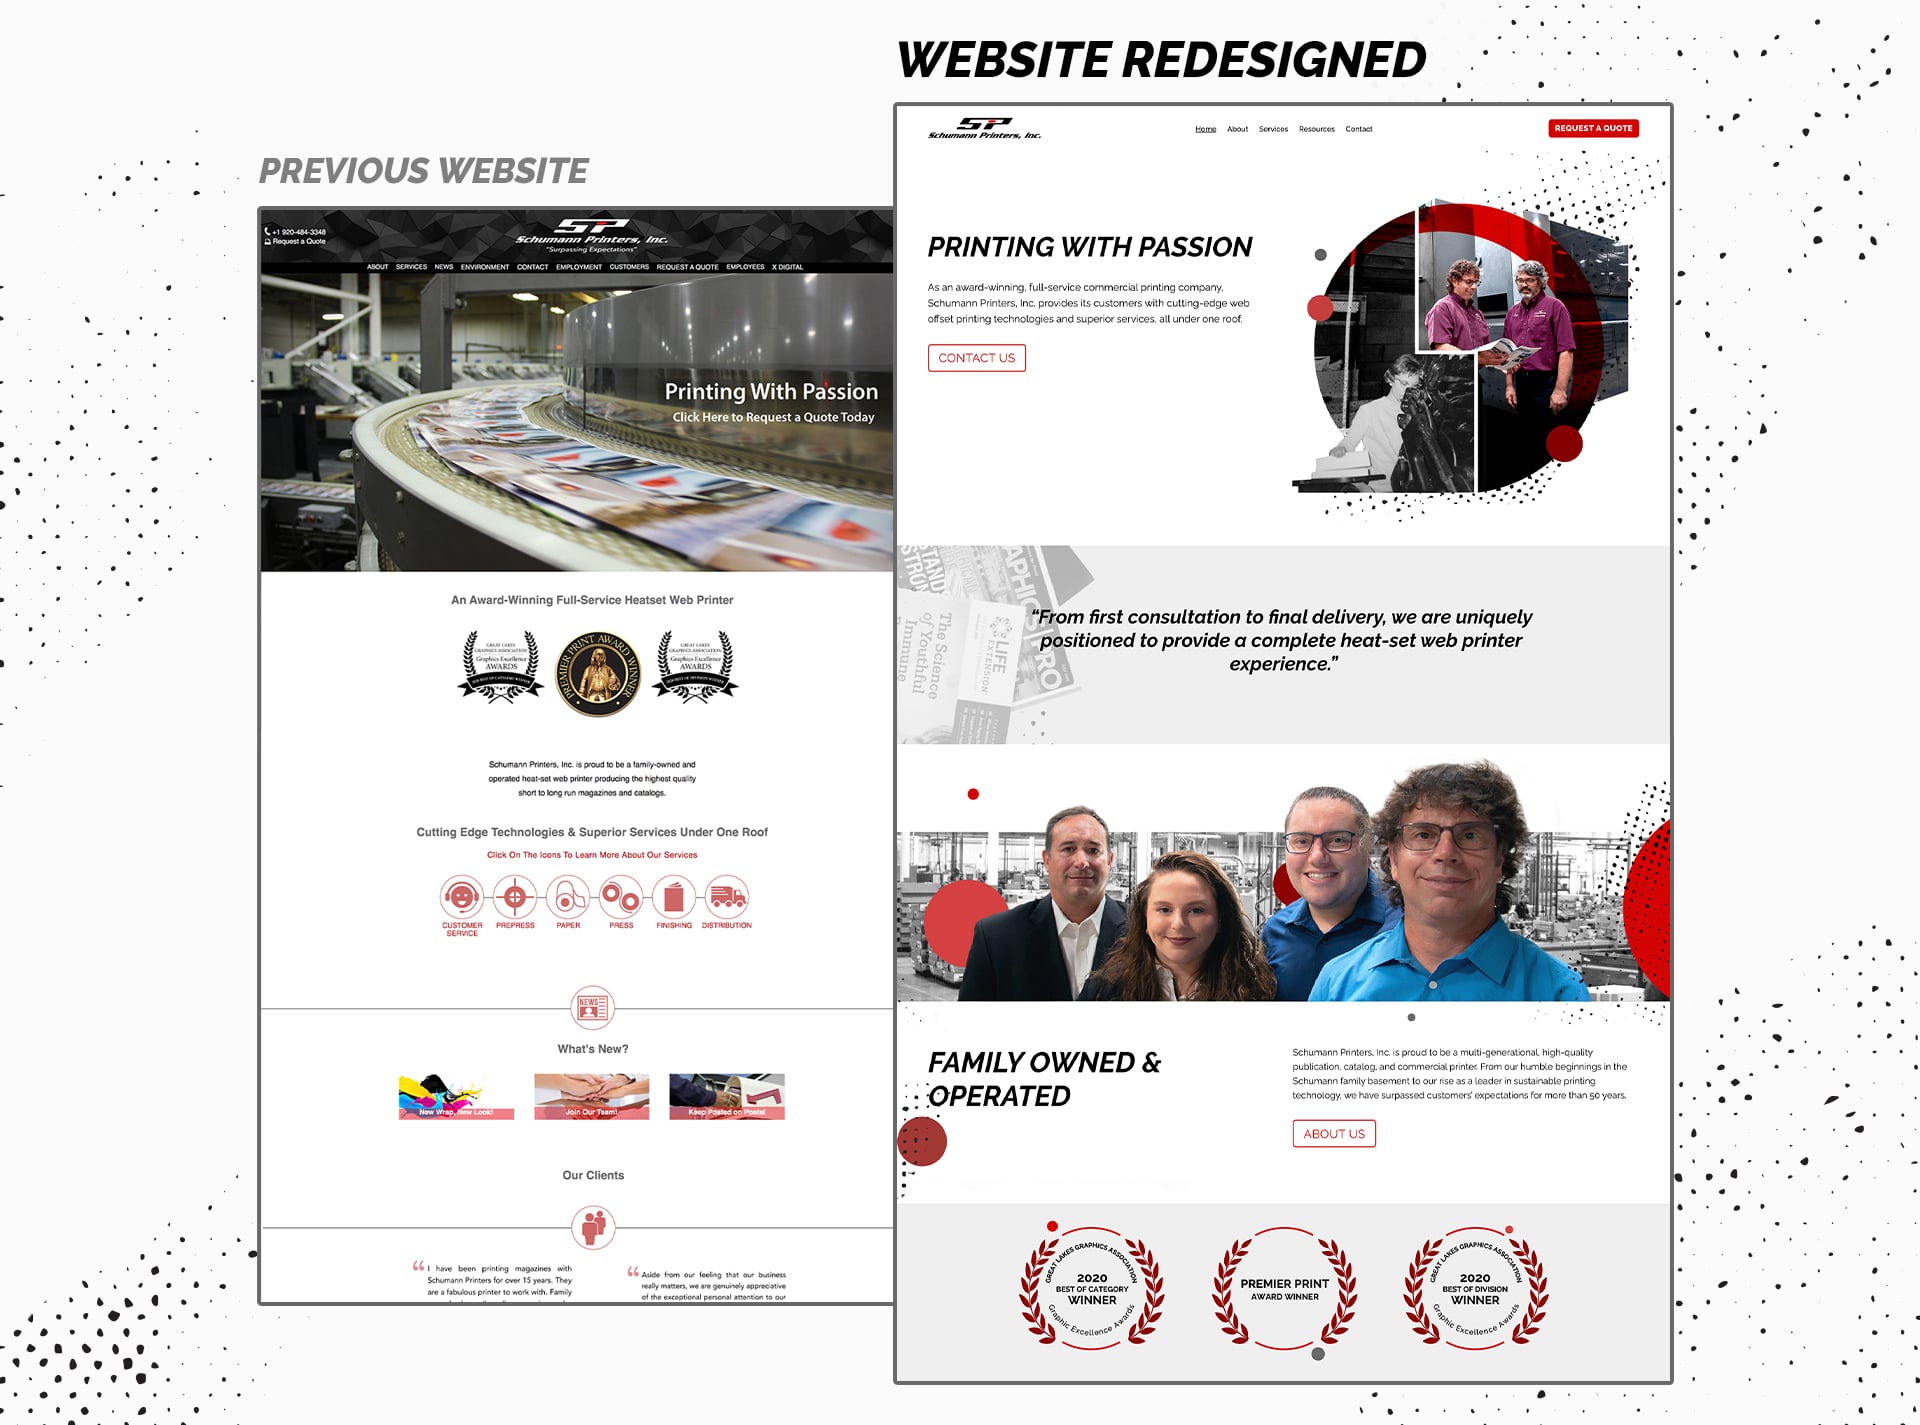 Previous website vs newly redesigned website